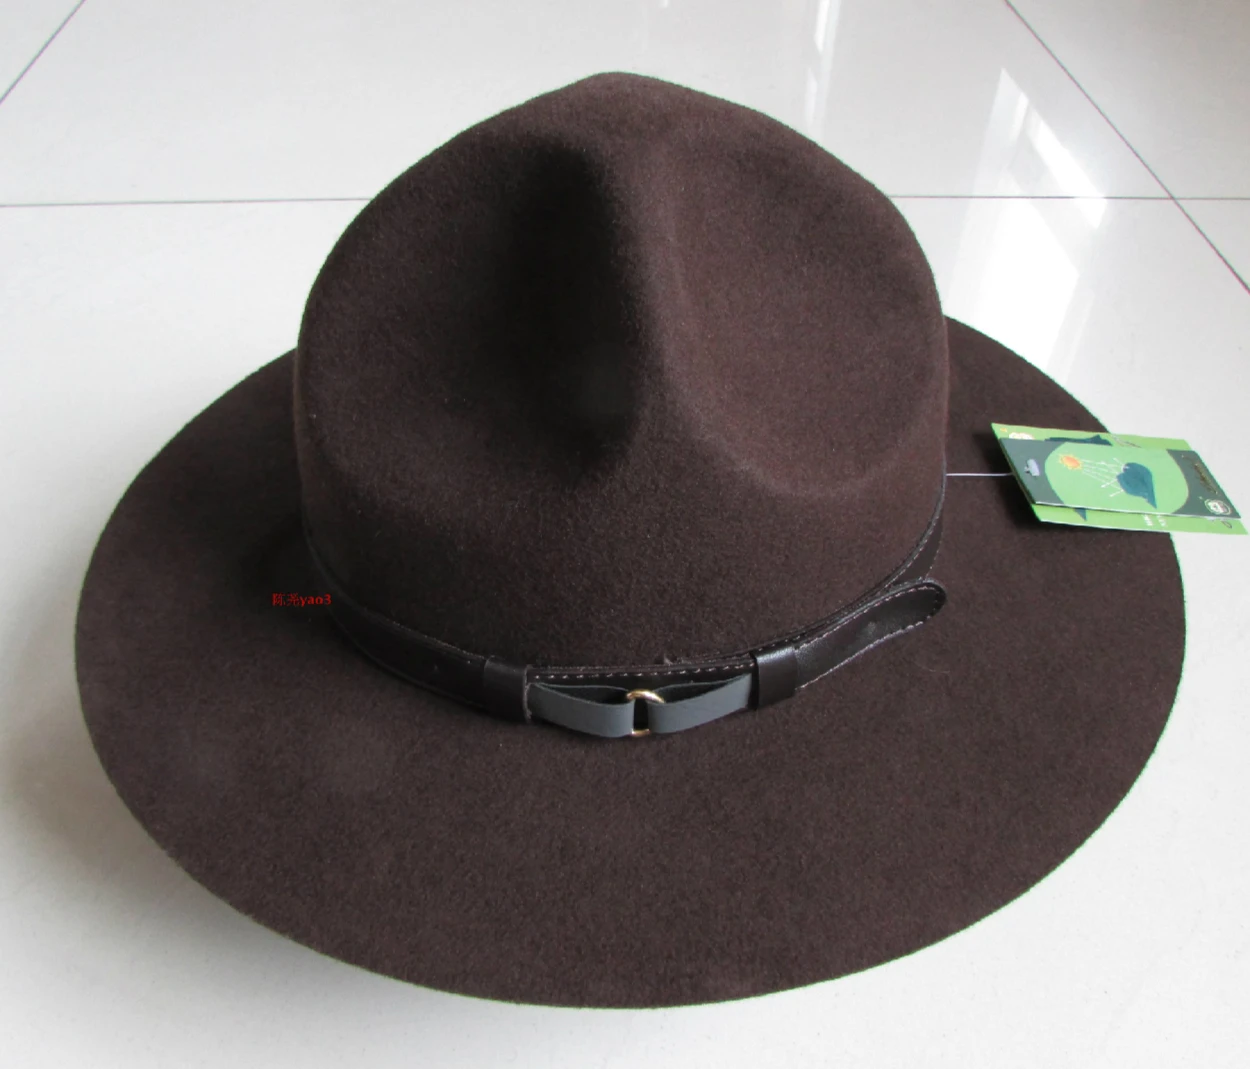 Мужская шерстяная фетровая шляпа, Мужская индивидуальная шляпа, три отверстия, шерстяная шапка, австралийская фетровая шляпа, модная, унисекс, Панама джазовая, шляпа B-8124